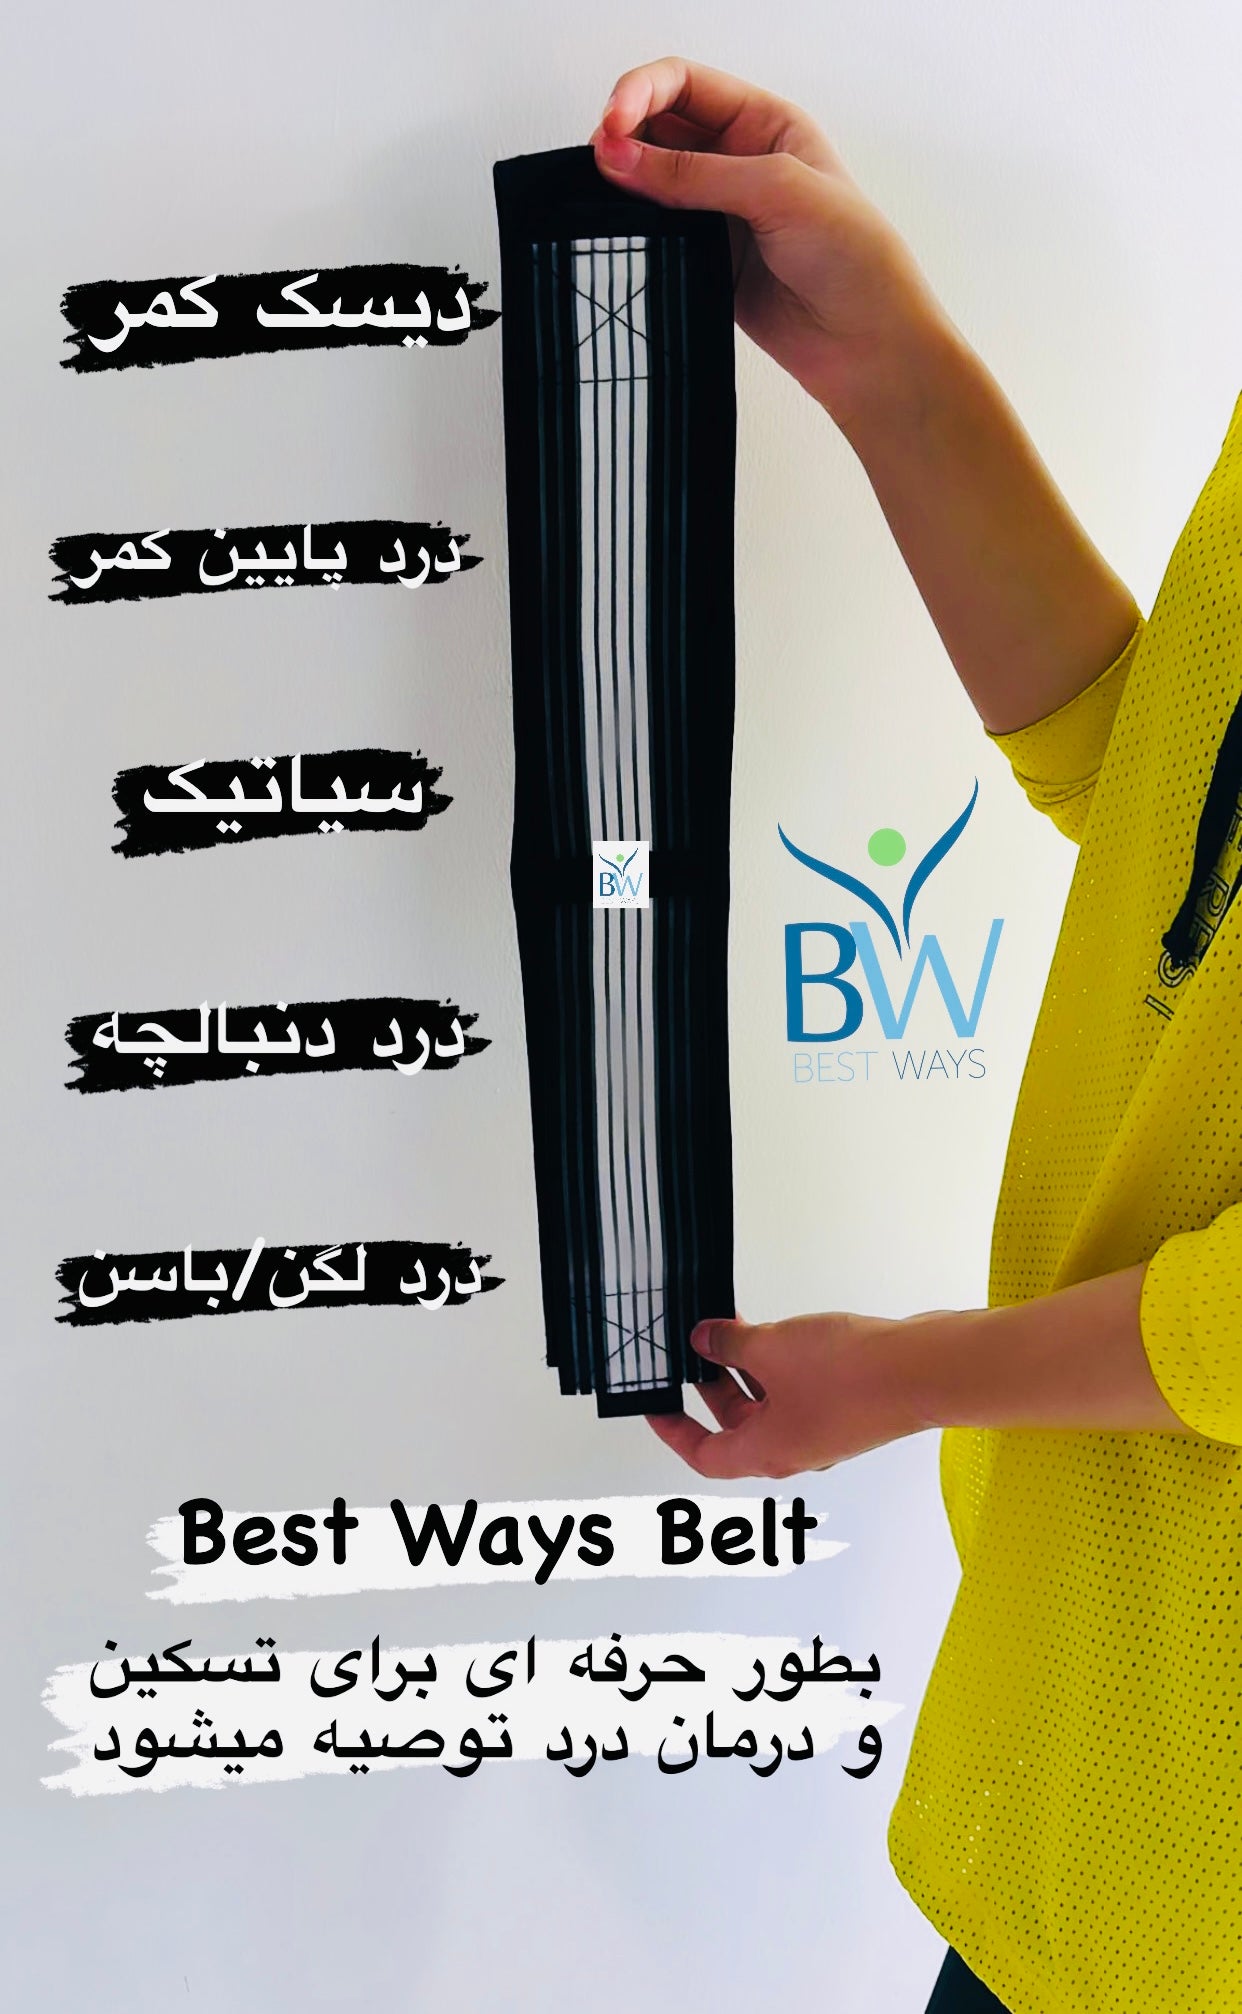 Best Ways Belt(Back Pain, Lower Back Pain, Hip Pain and Sciatica)